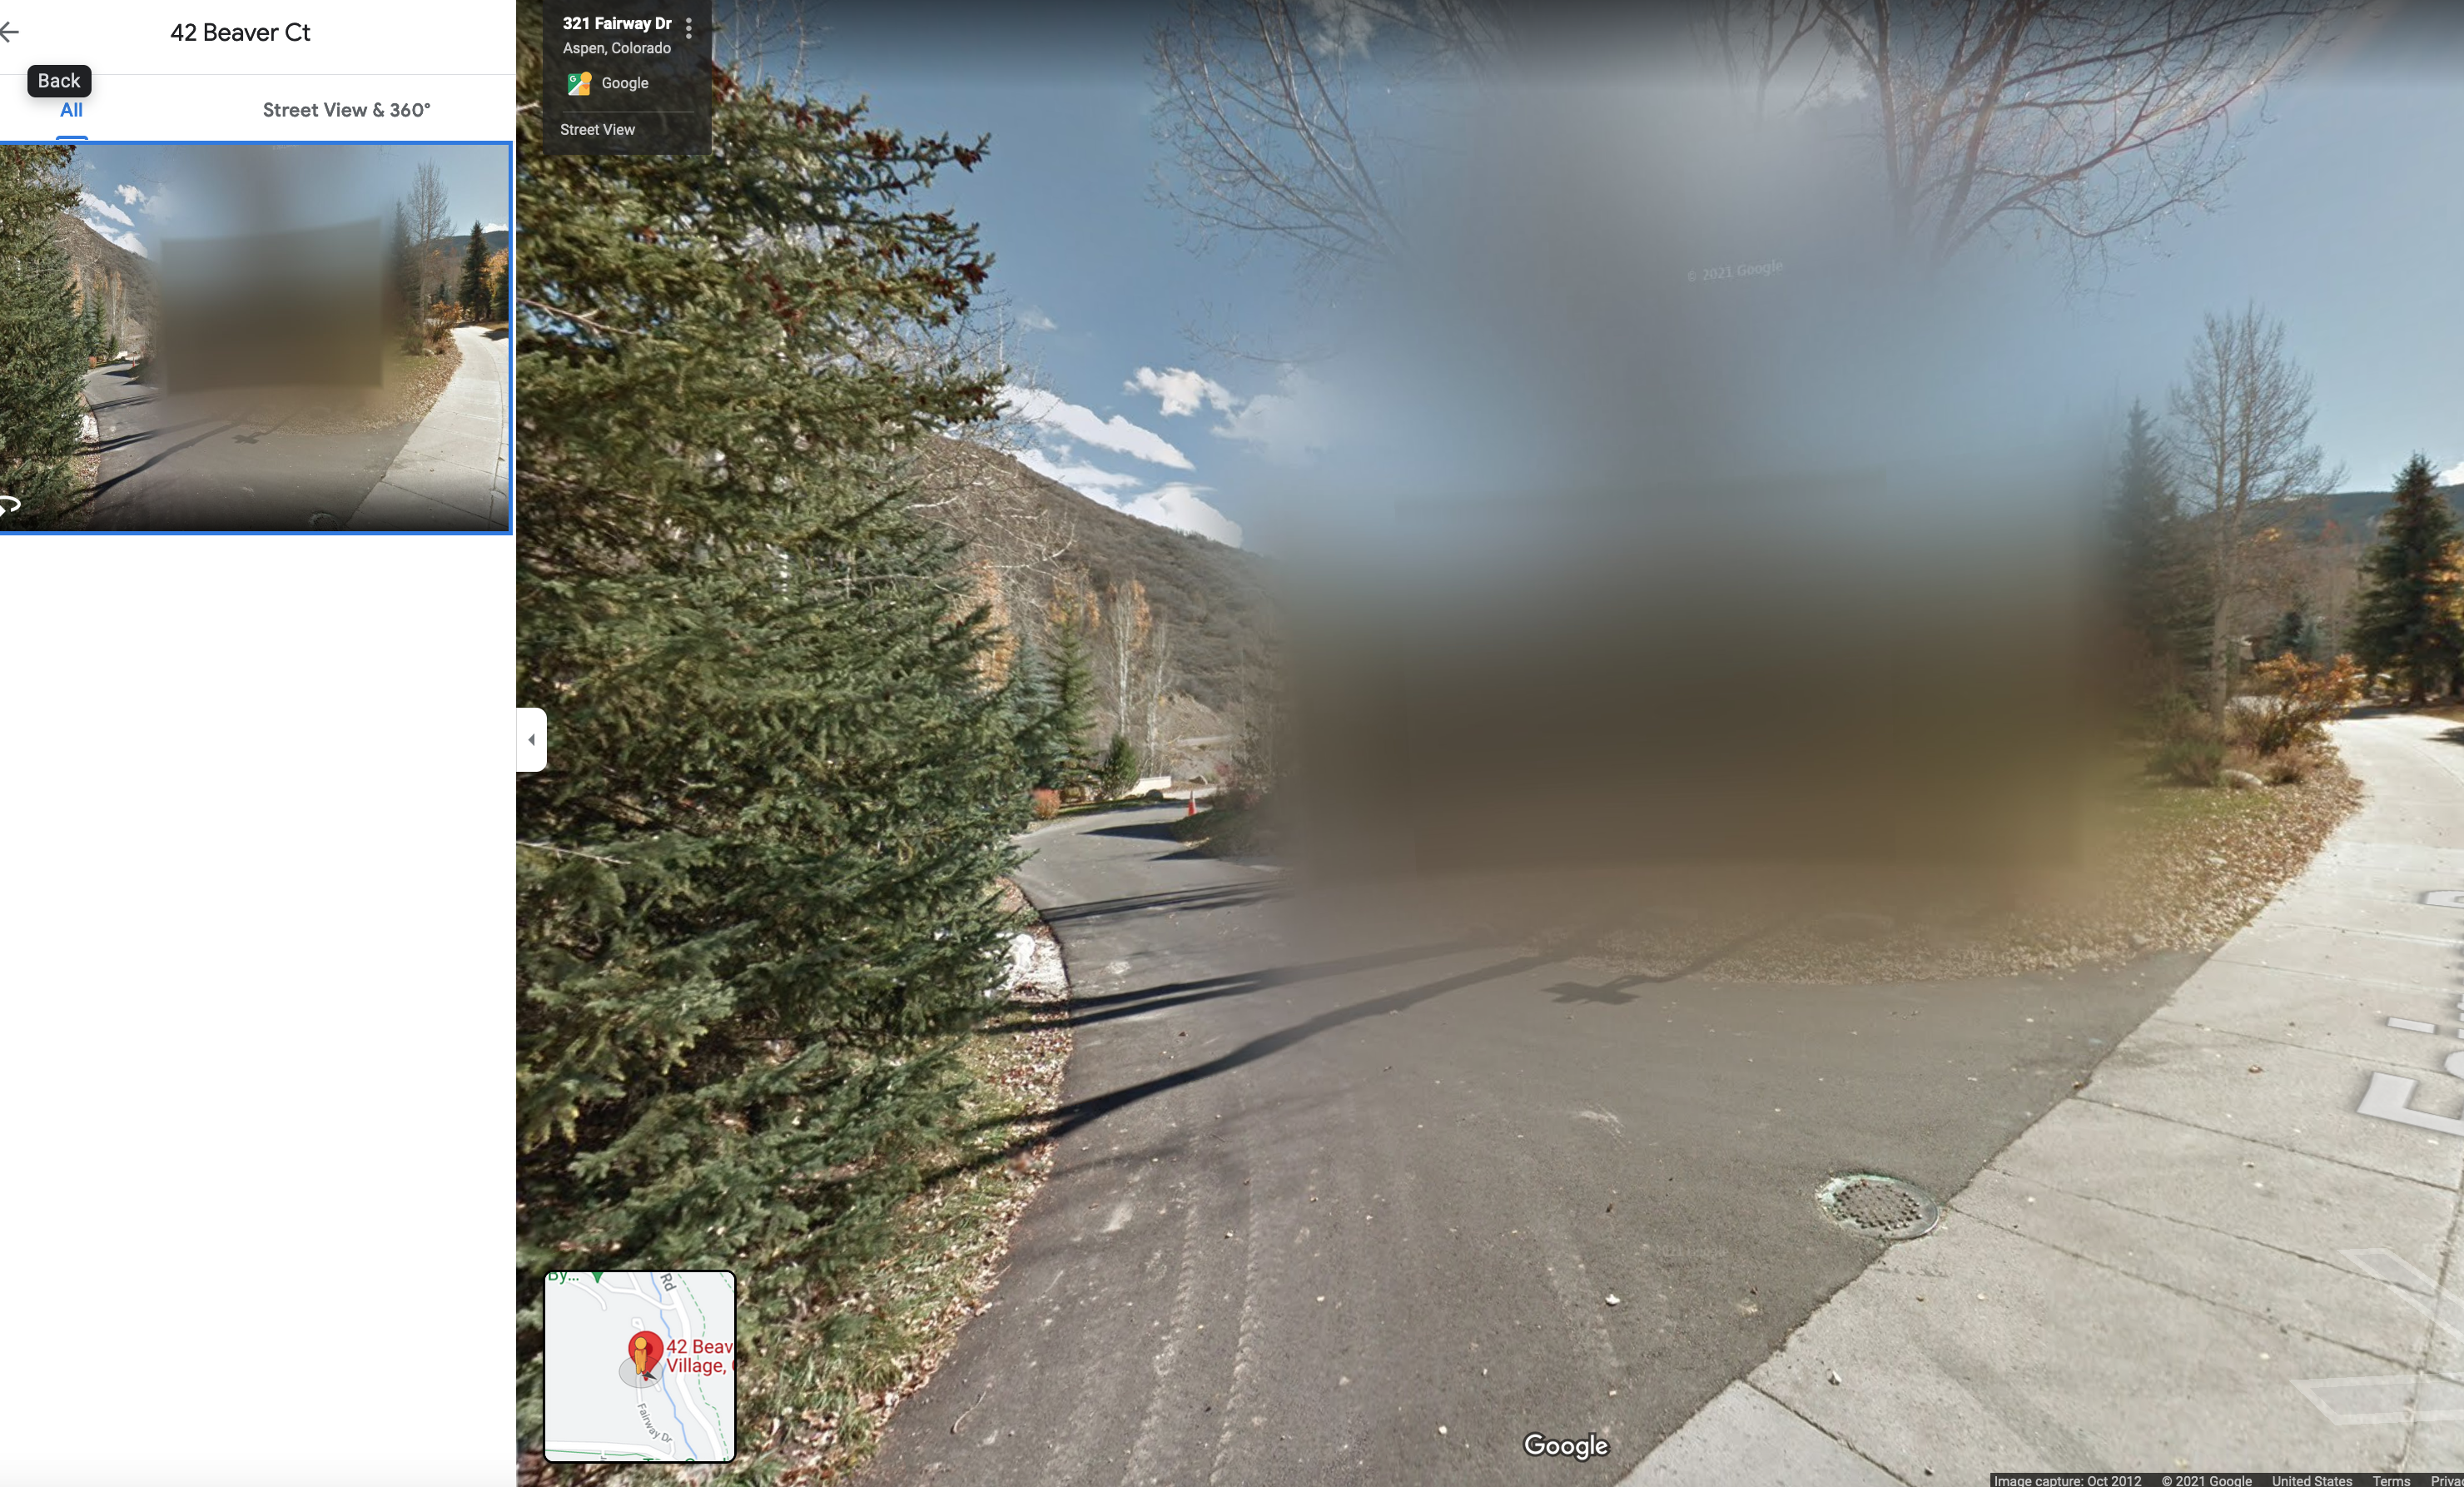 blurred house photo on Google Maps